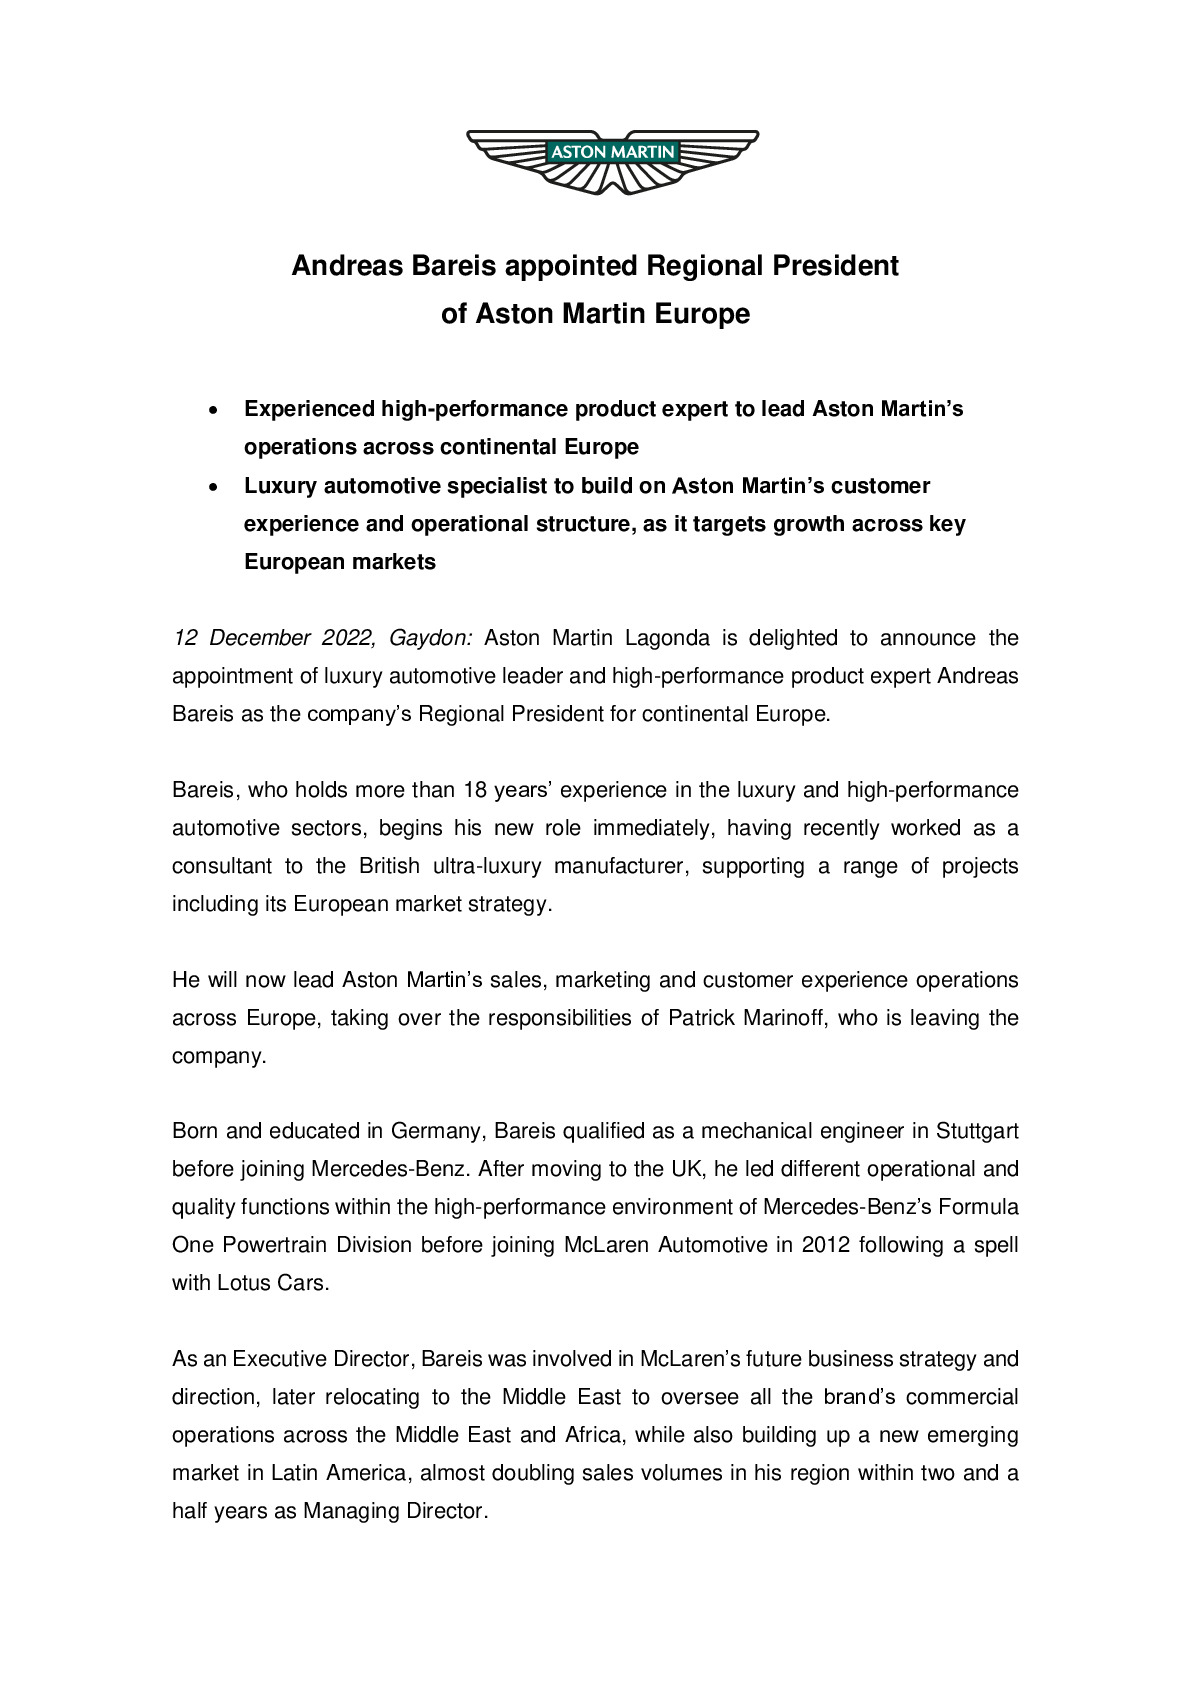 Andreas Bareis appointed Regional President of Aston Martin Europe